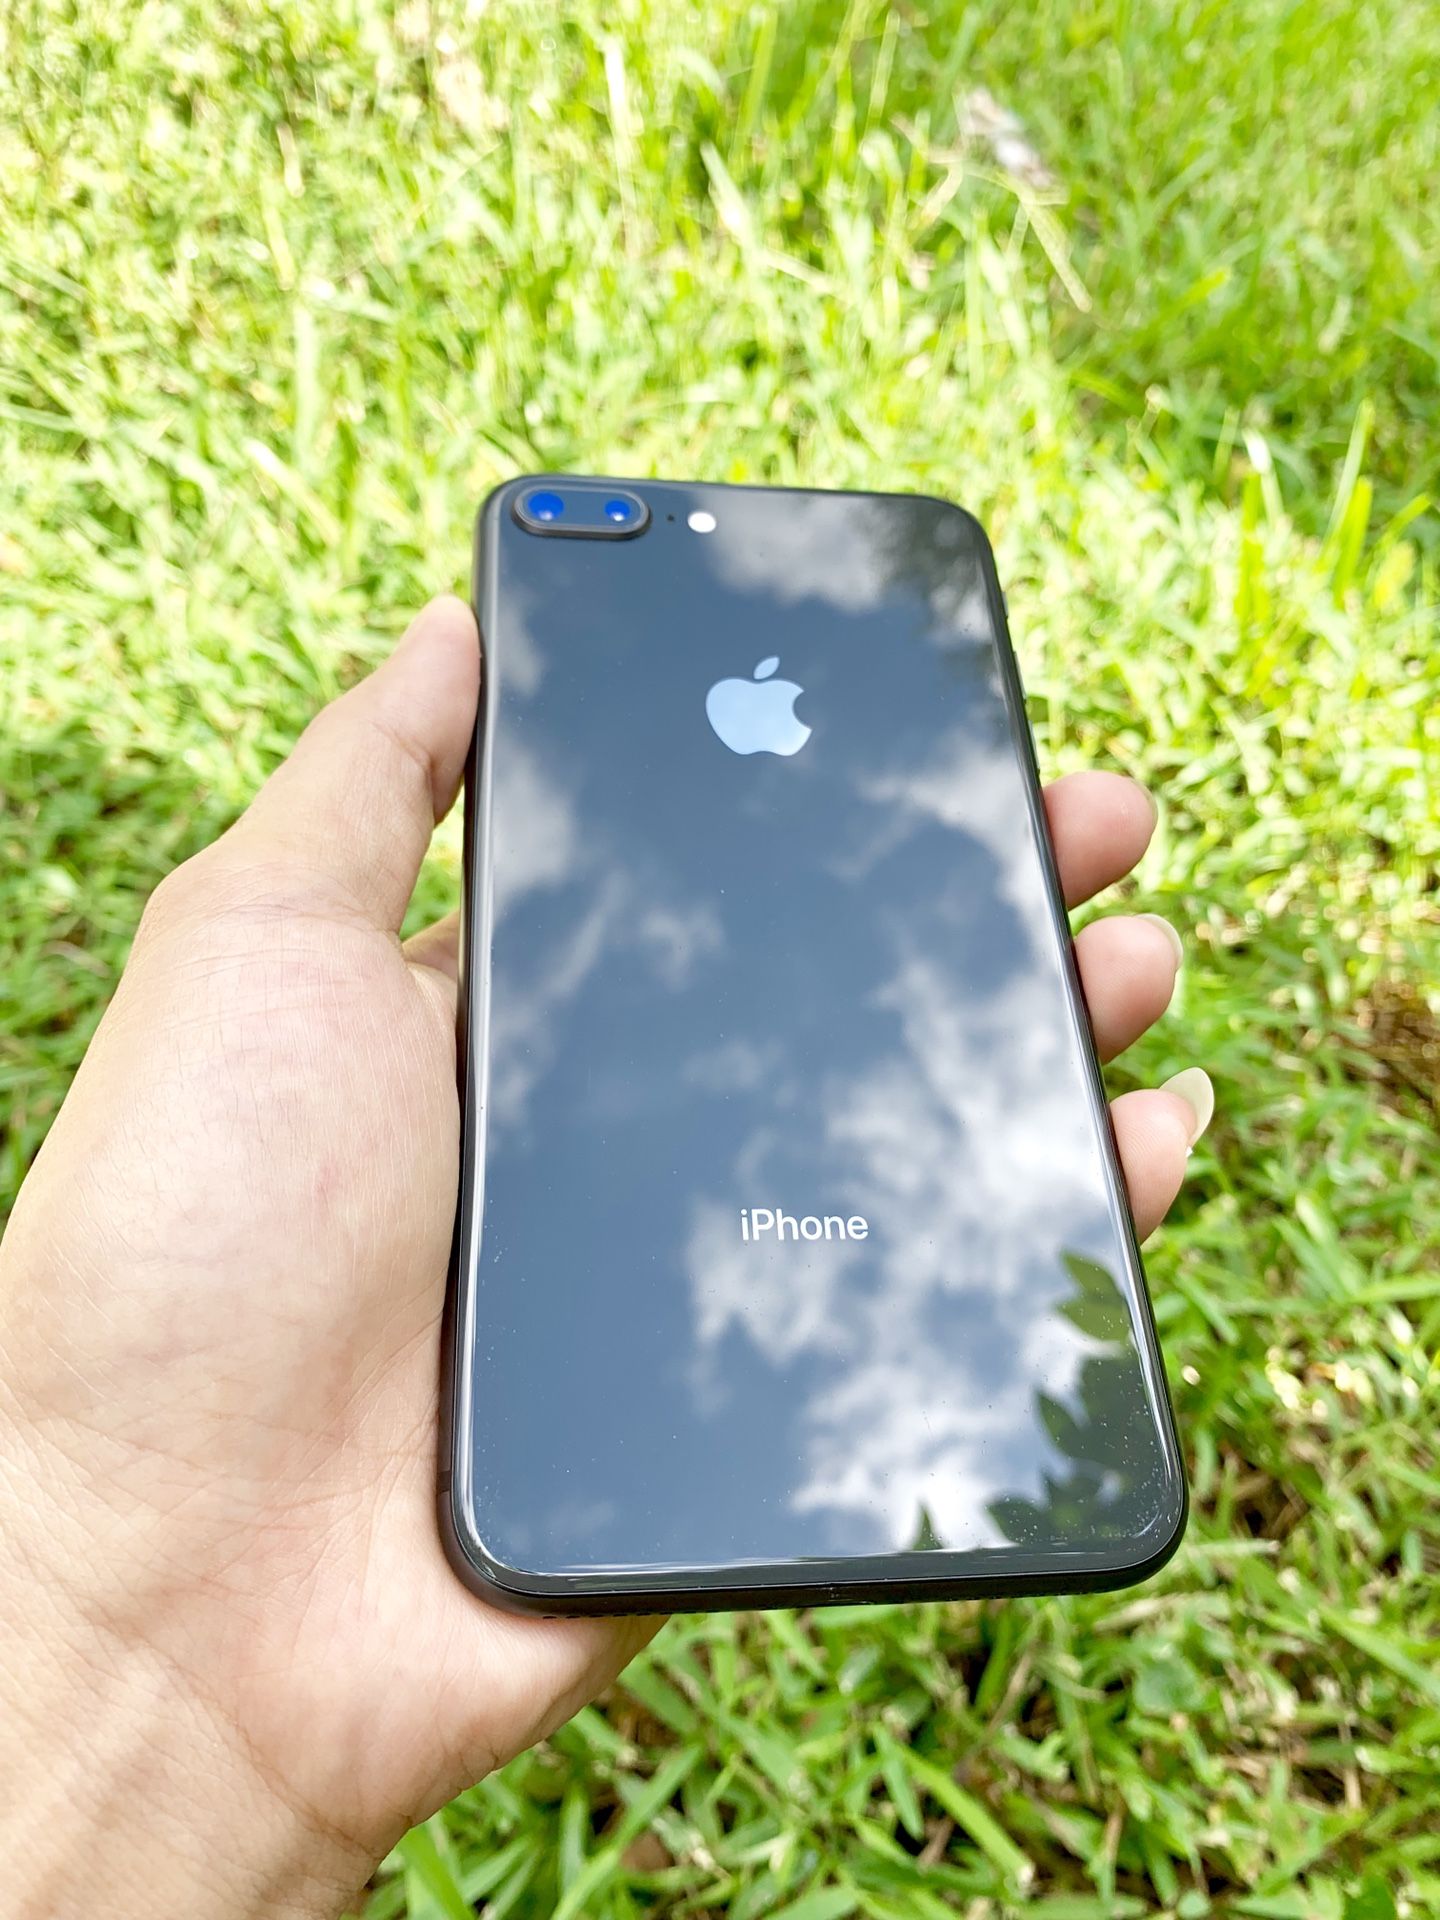 iPHONE 8 PLUS UNLOCKED - LIKE NEW - REAL PICS